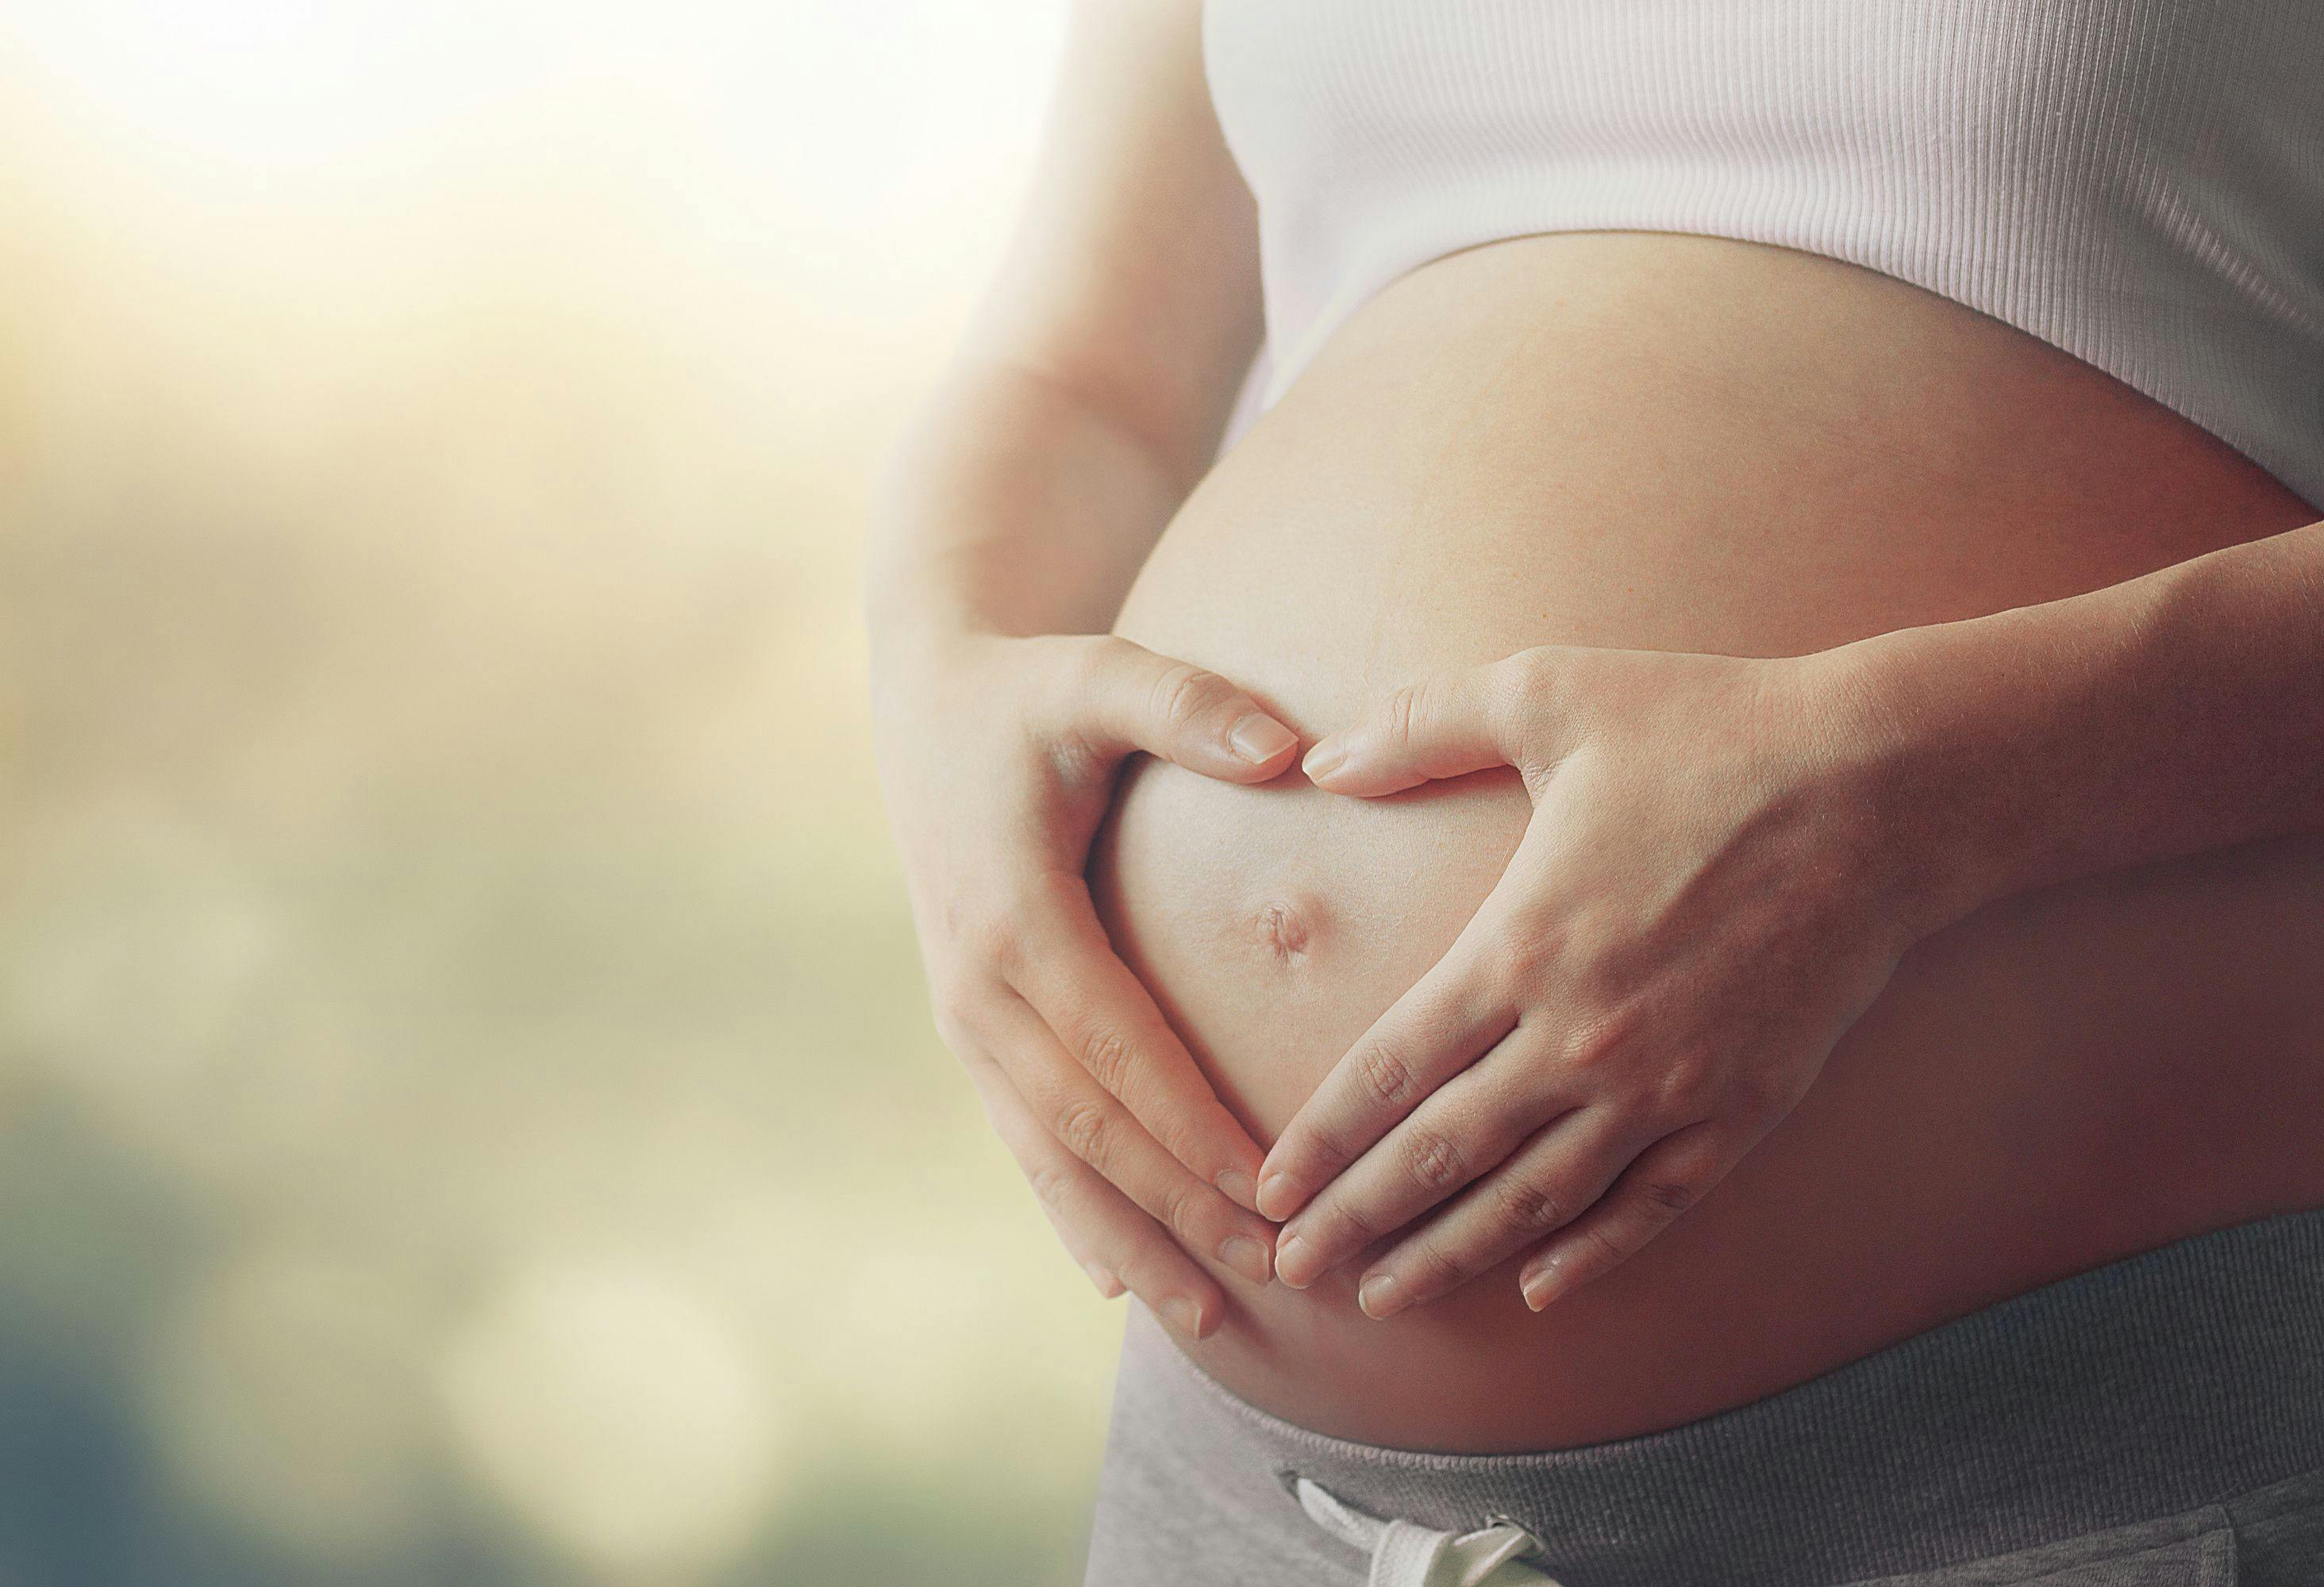 pregnant woman | Image Credit: BazziBa - stock.adobe.com